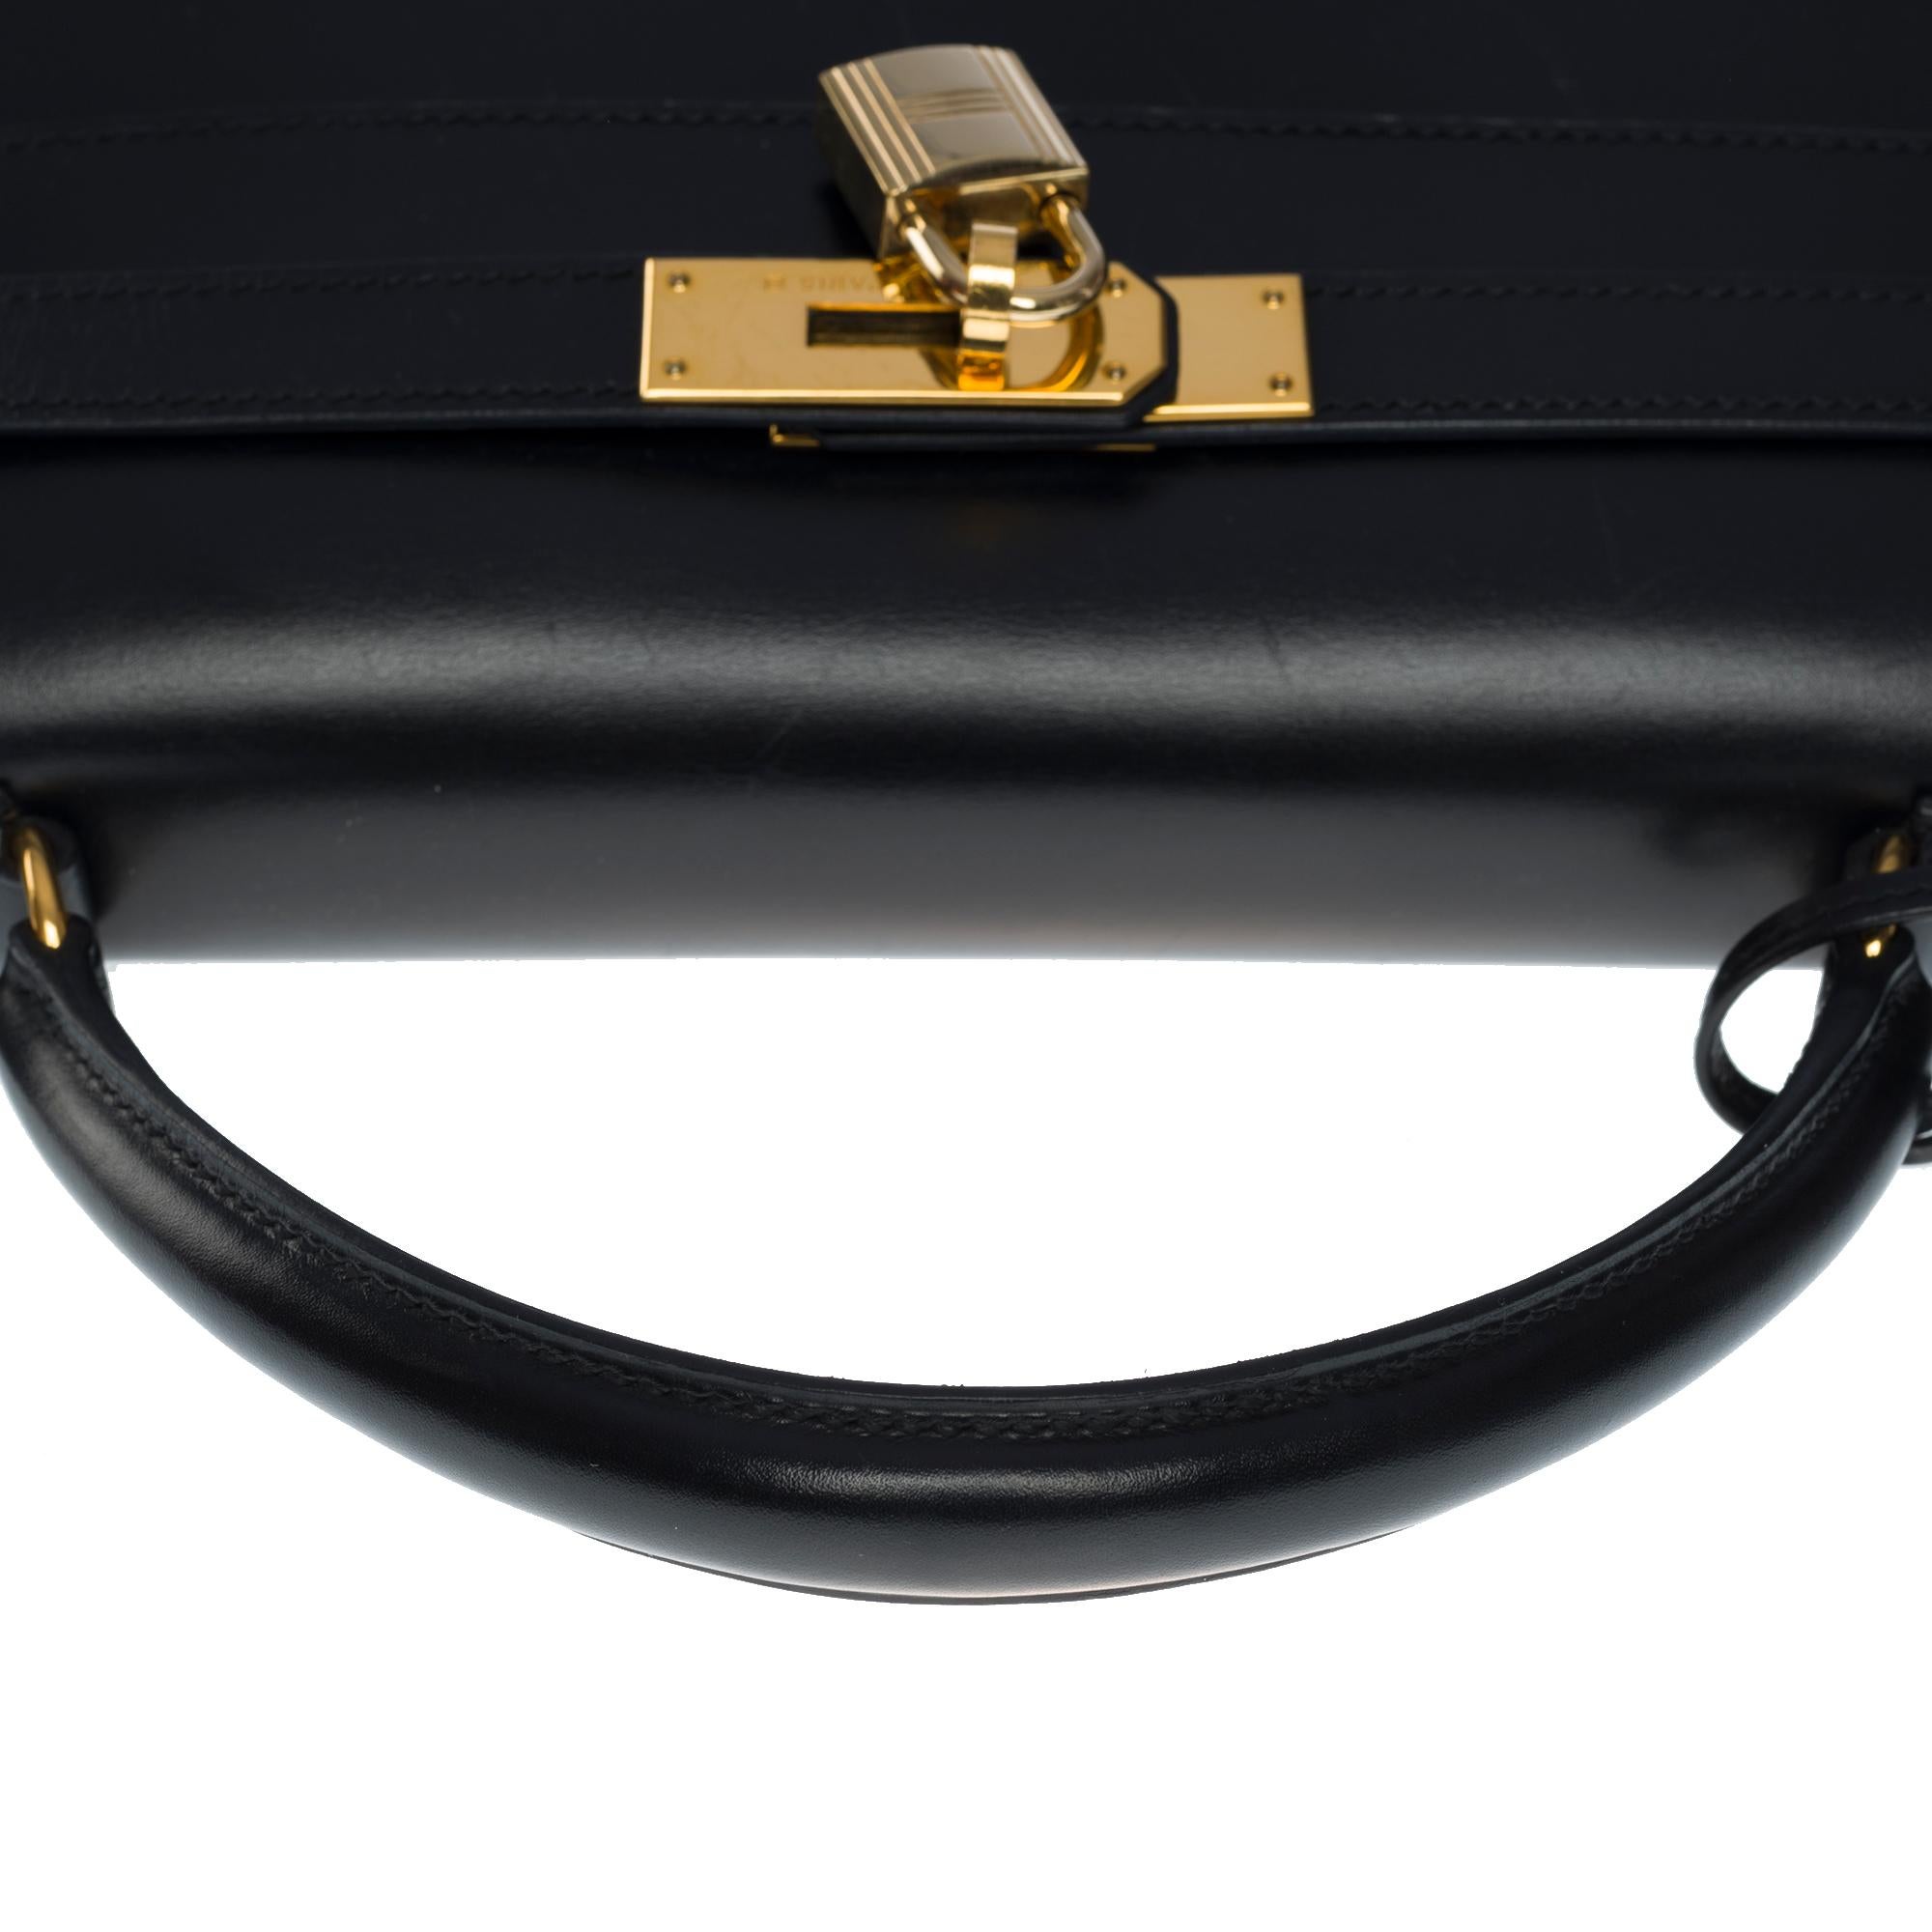 Gorgeous Hermès Kelly 32 sellier handbag strap in black box calf leather, GHW For Sale 4